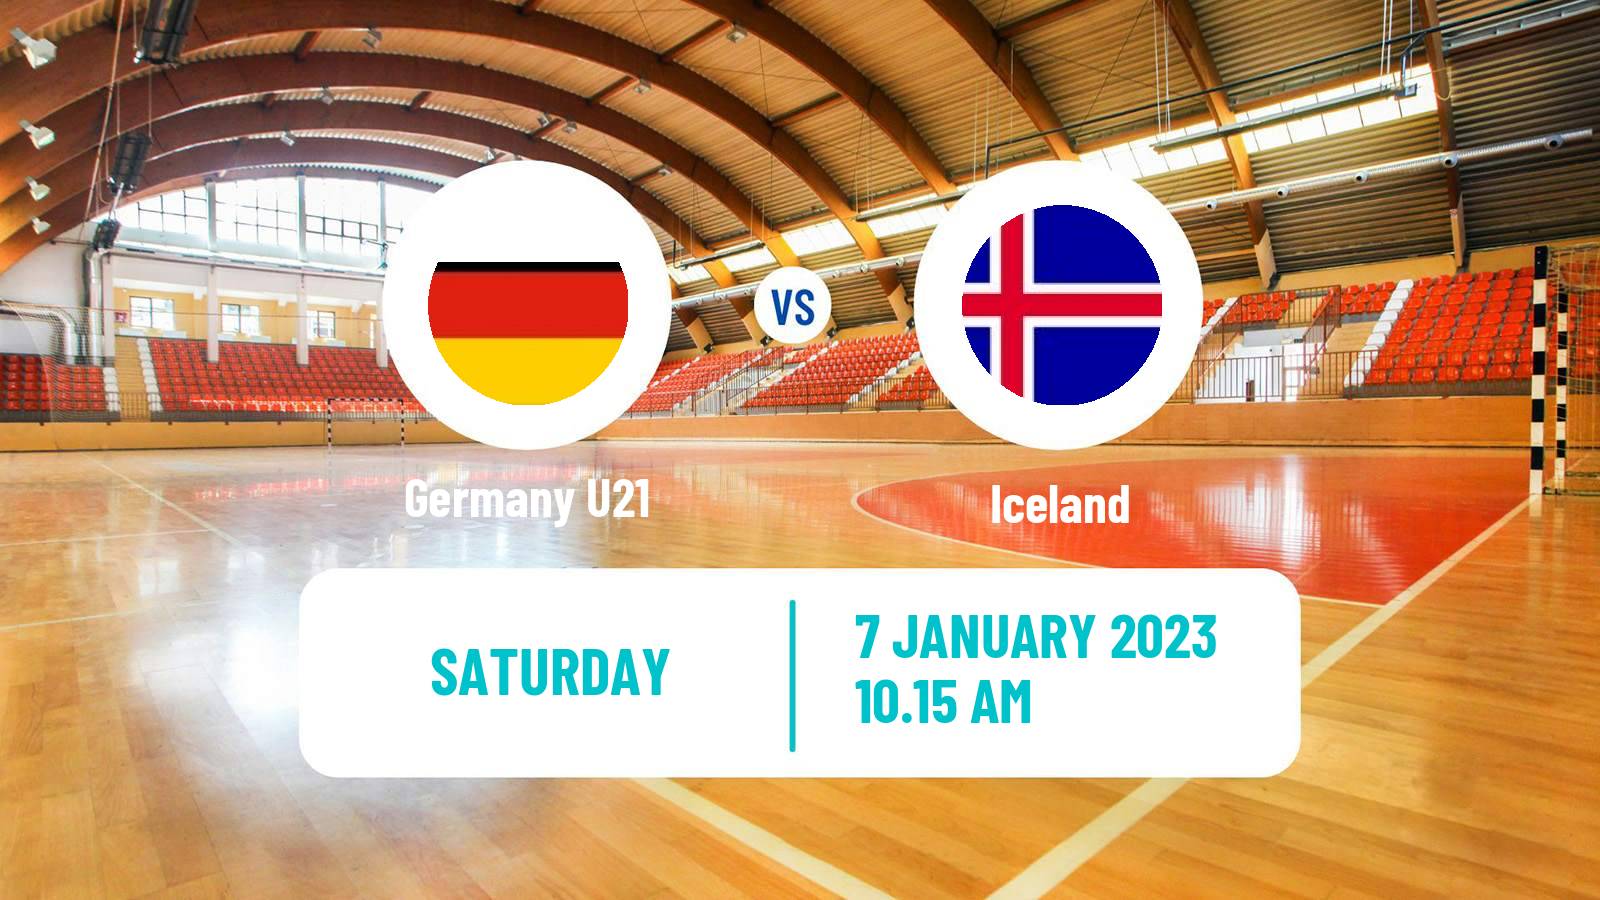 Handball Friendly International Handball Germany U21 - Iceland